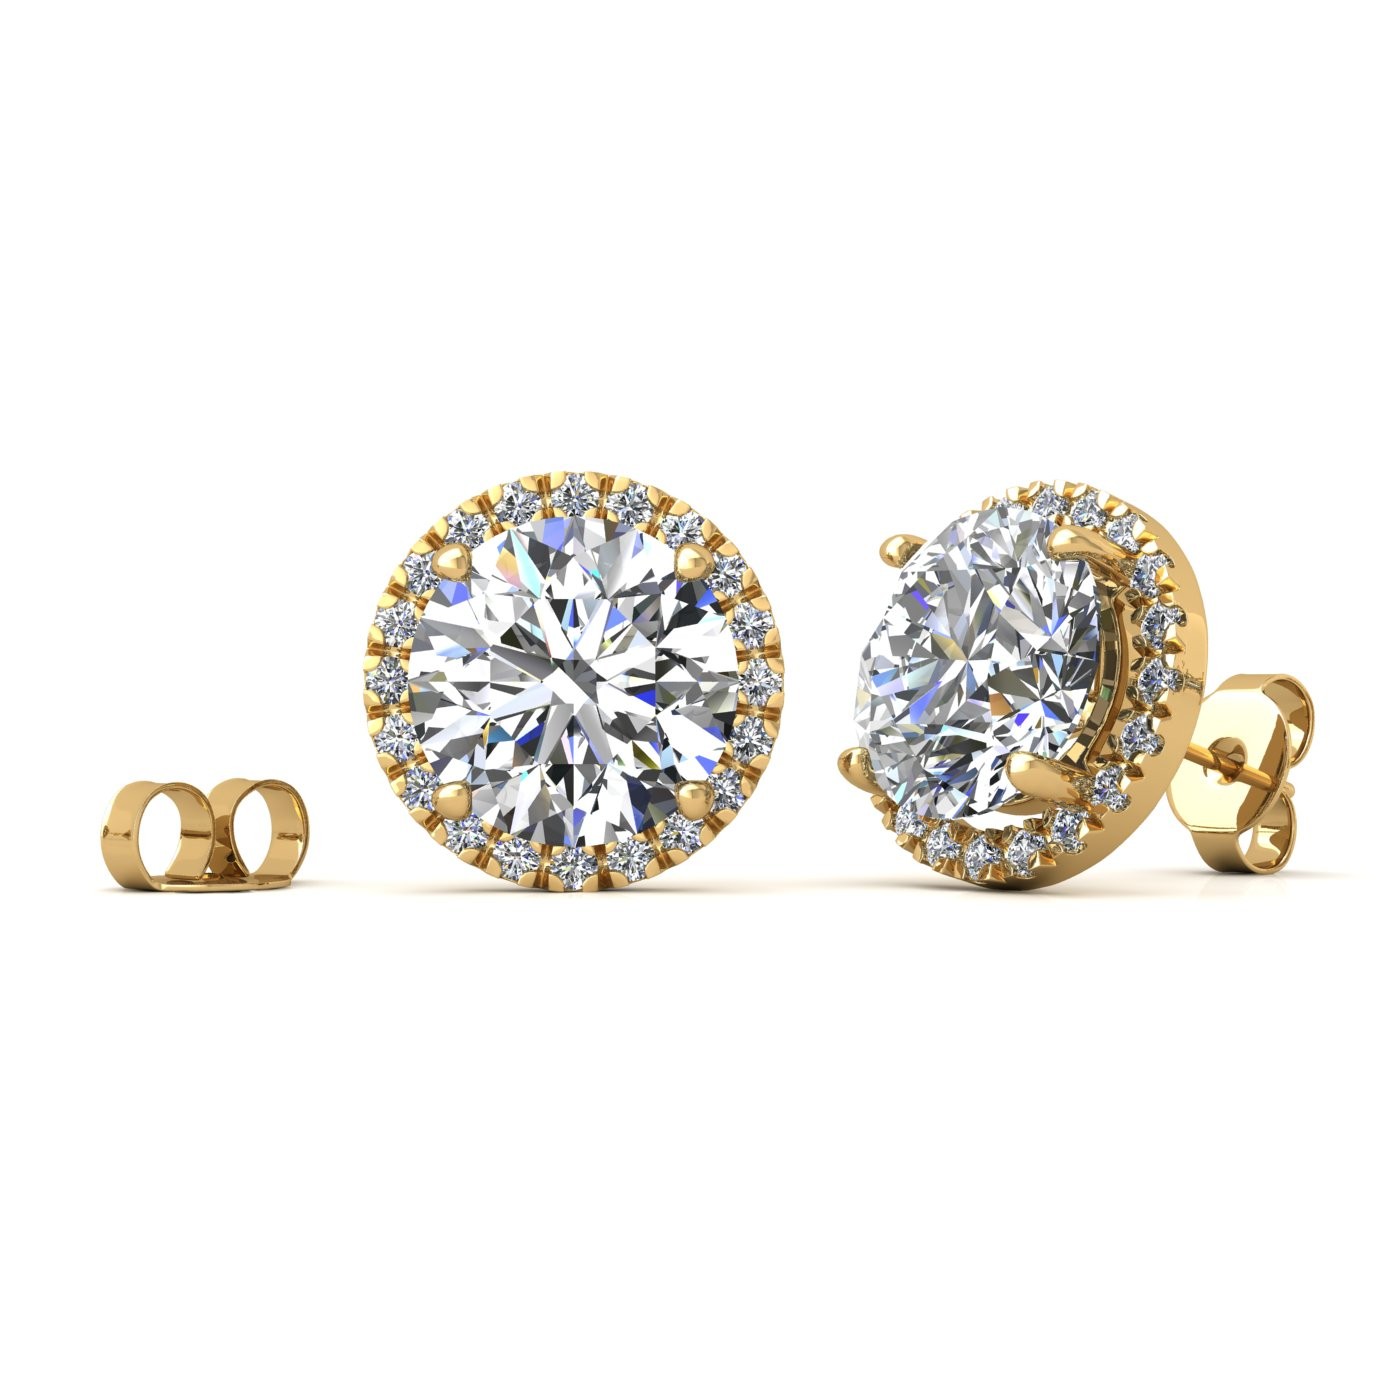 18k yellow gold  1,5 ct each (3,0 tcw) 4 prongs round shape diamond earrings with diamond pavÉ set halo Photos & images